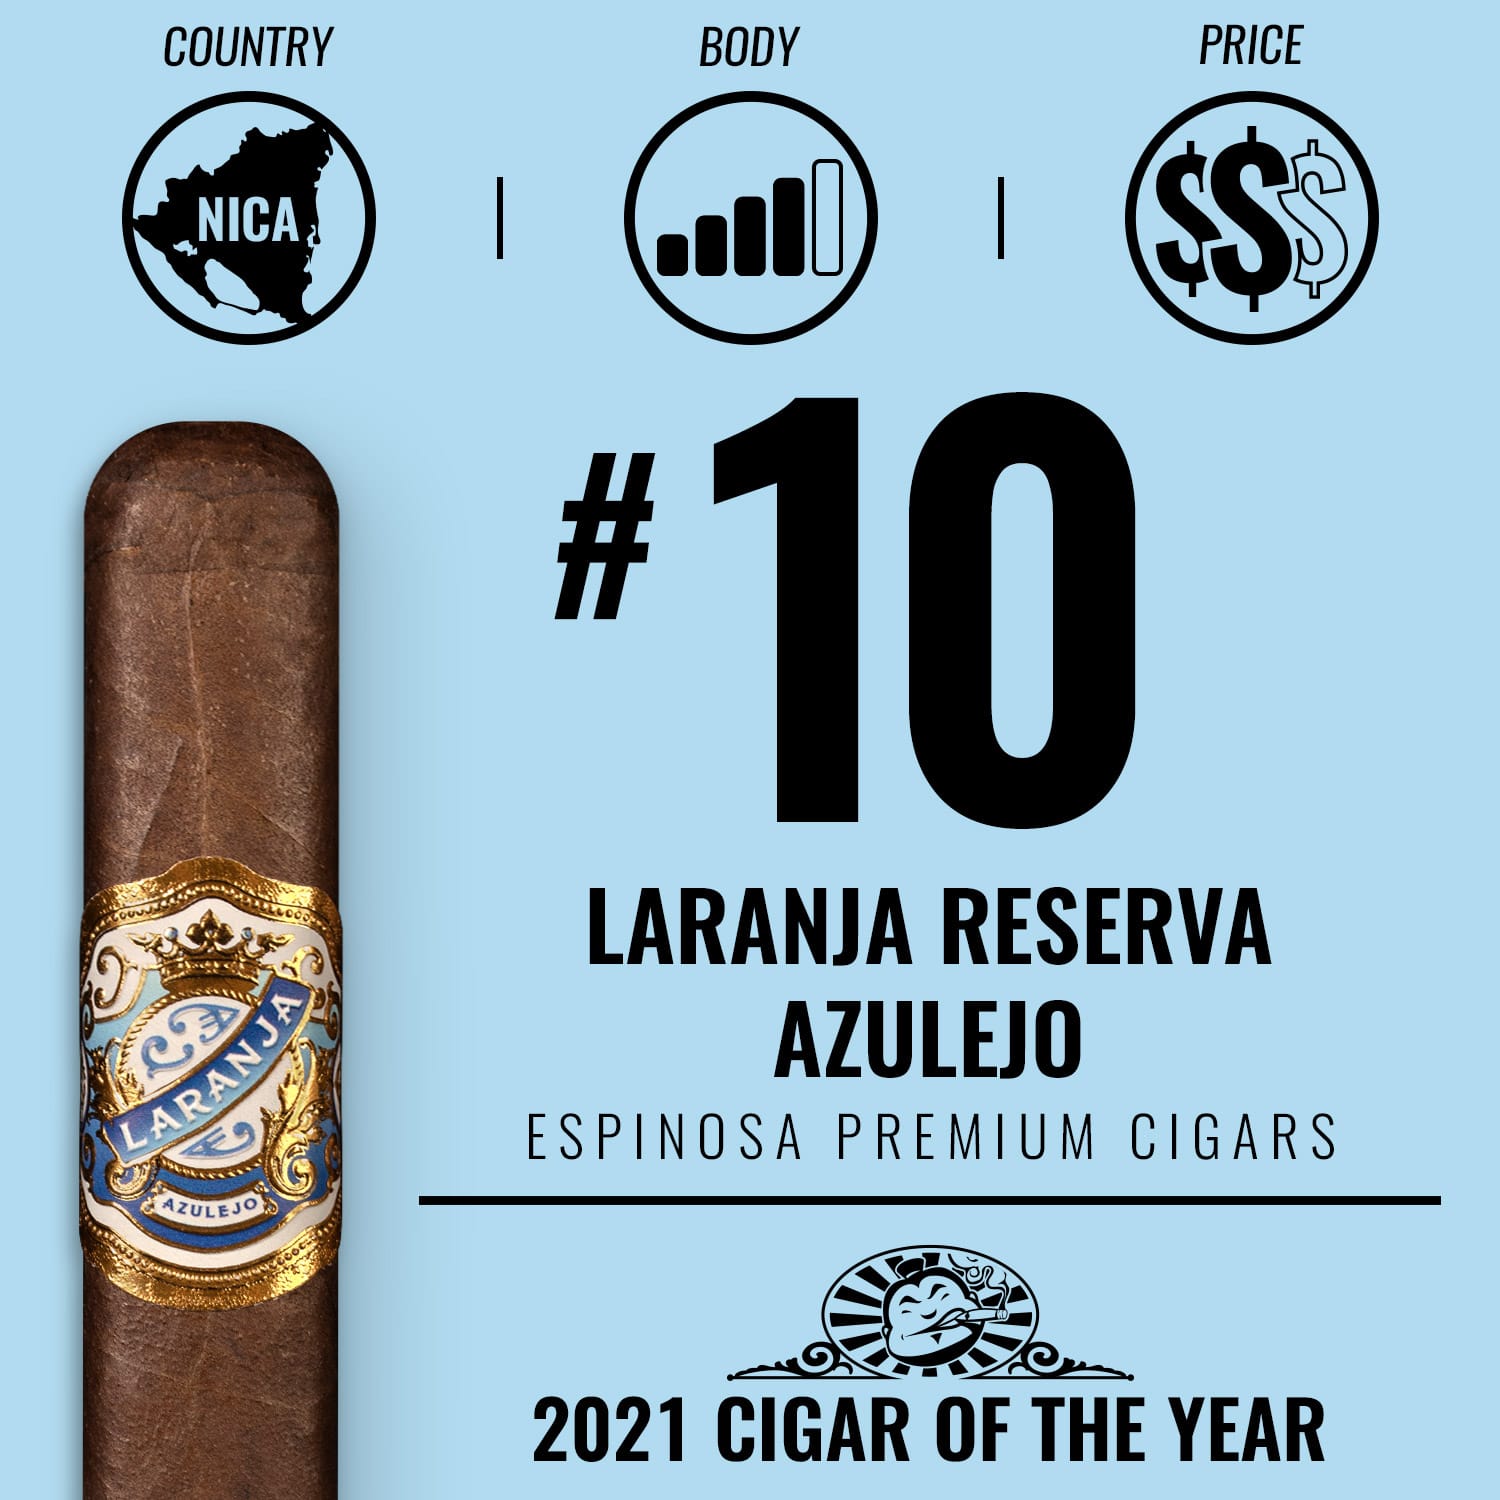 Espinosa Laranja Reserva Azulejo No. 10 Cigar of the Year 2021